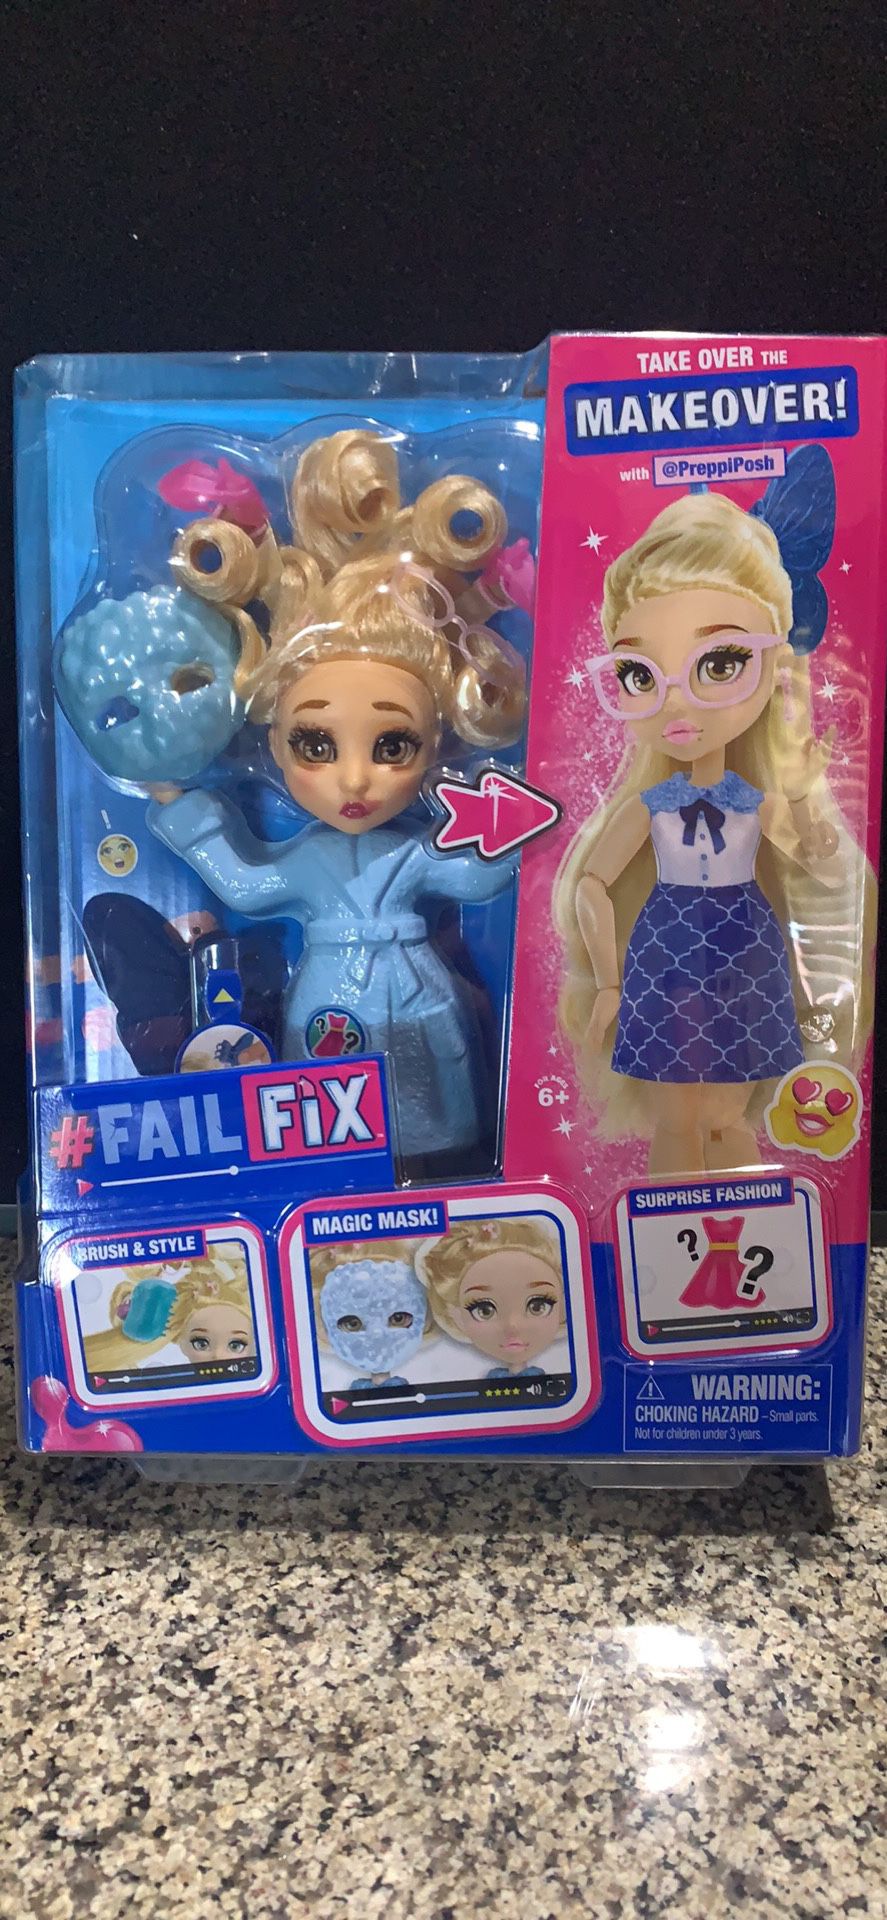 Failfix - PreppiPosh Total Makeover Doll Pack | 8.5" inch Fashion Doll | Total Head-to-Toe Transformation